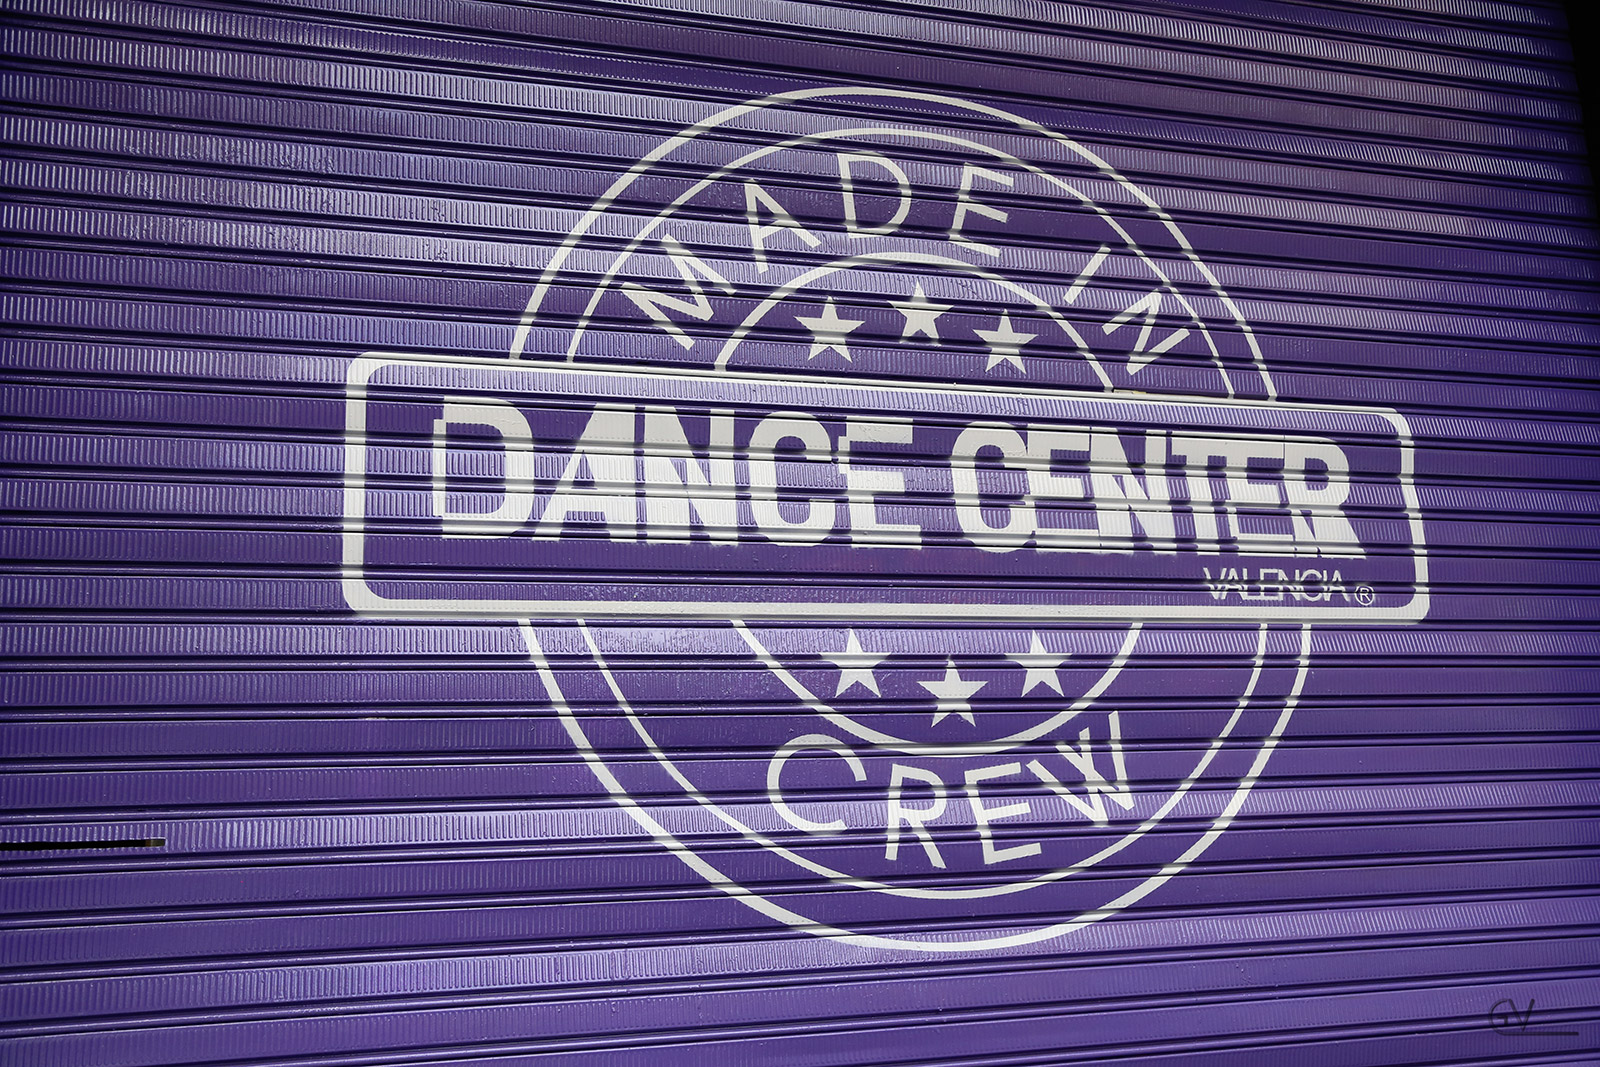 Dance Center · Valencia